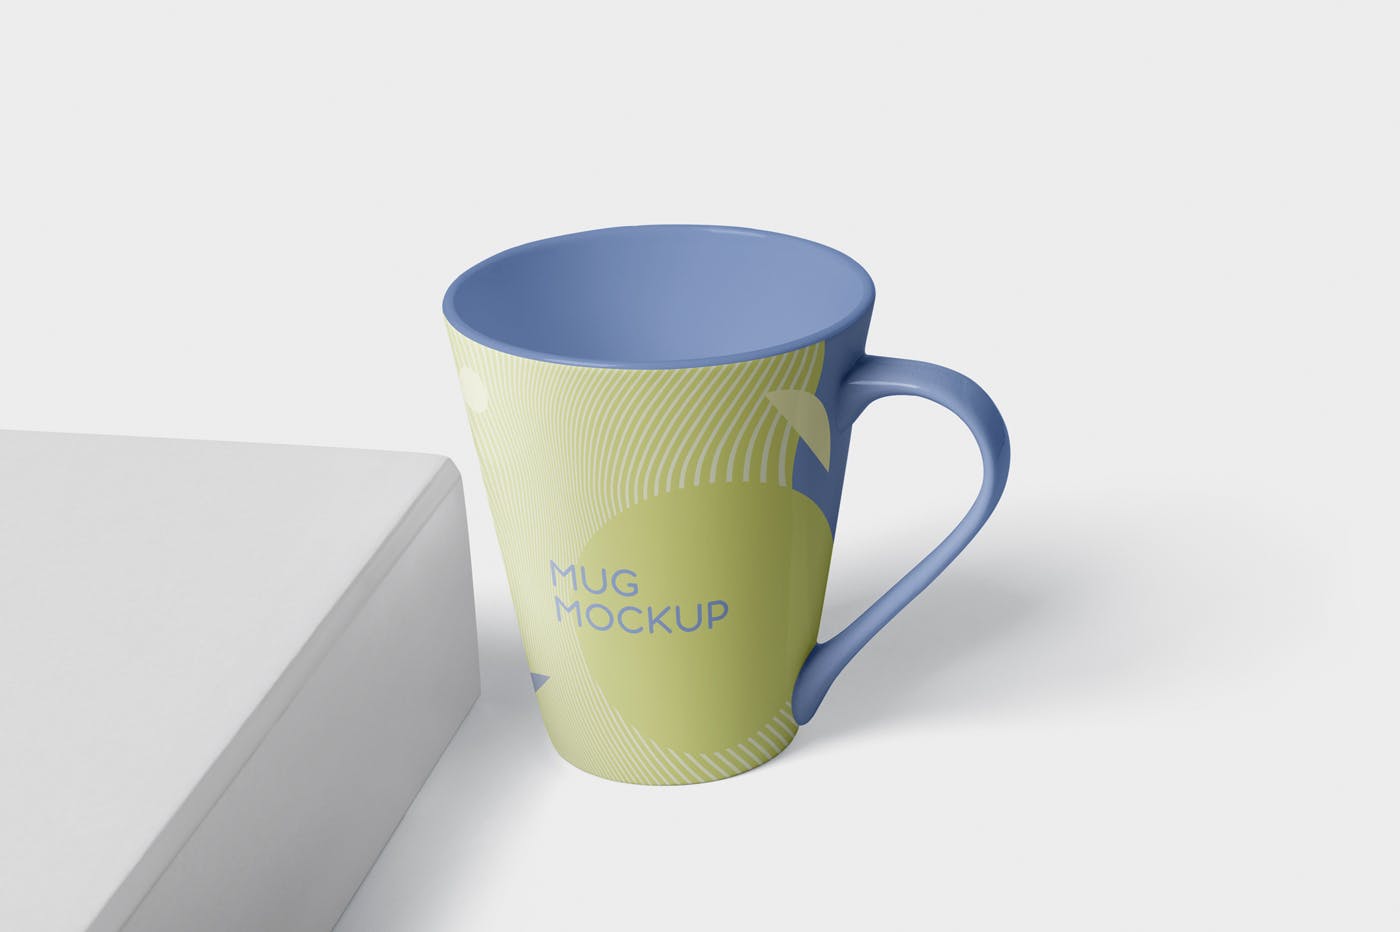 锥形马克杯图案设计普贤居精选 Mug Mockup – Cone Shaped插图(3)